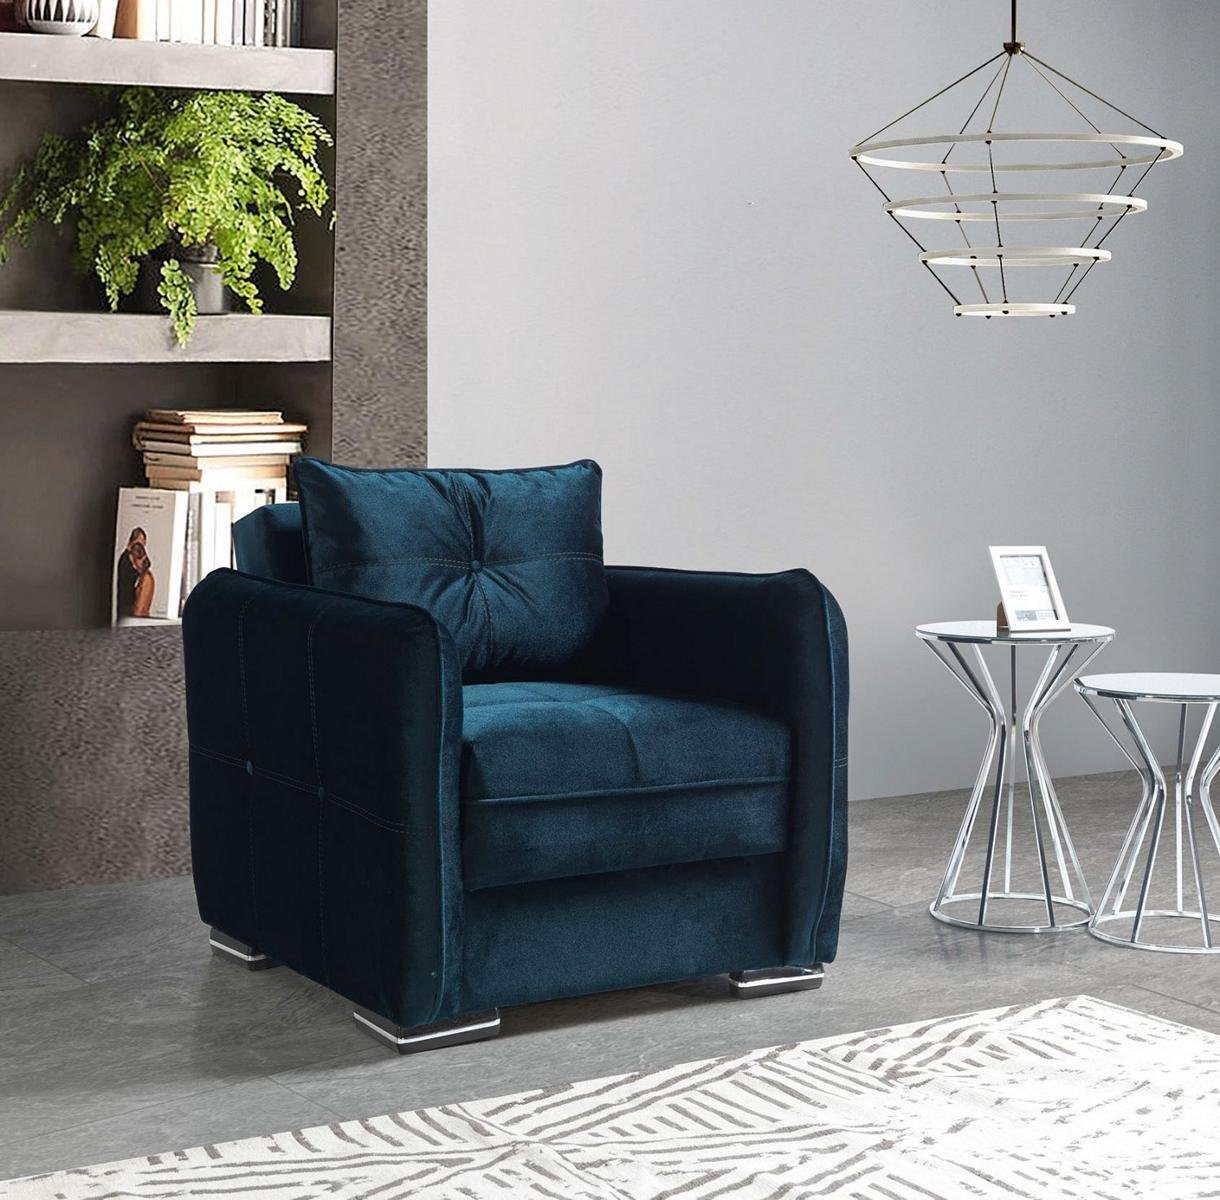 JVmoebel Sessel Design Sitzer Luxus Sessel Relax Textil Blau Farbe Sessel Club Lounge (Sessel), Made In Europe von JVmoebel